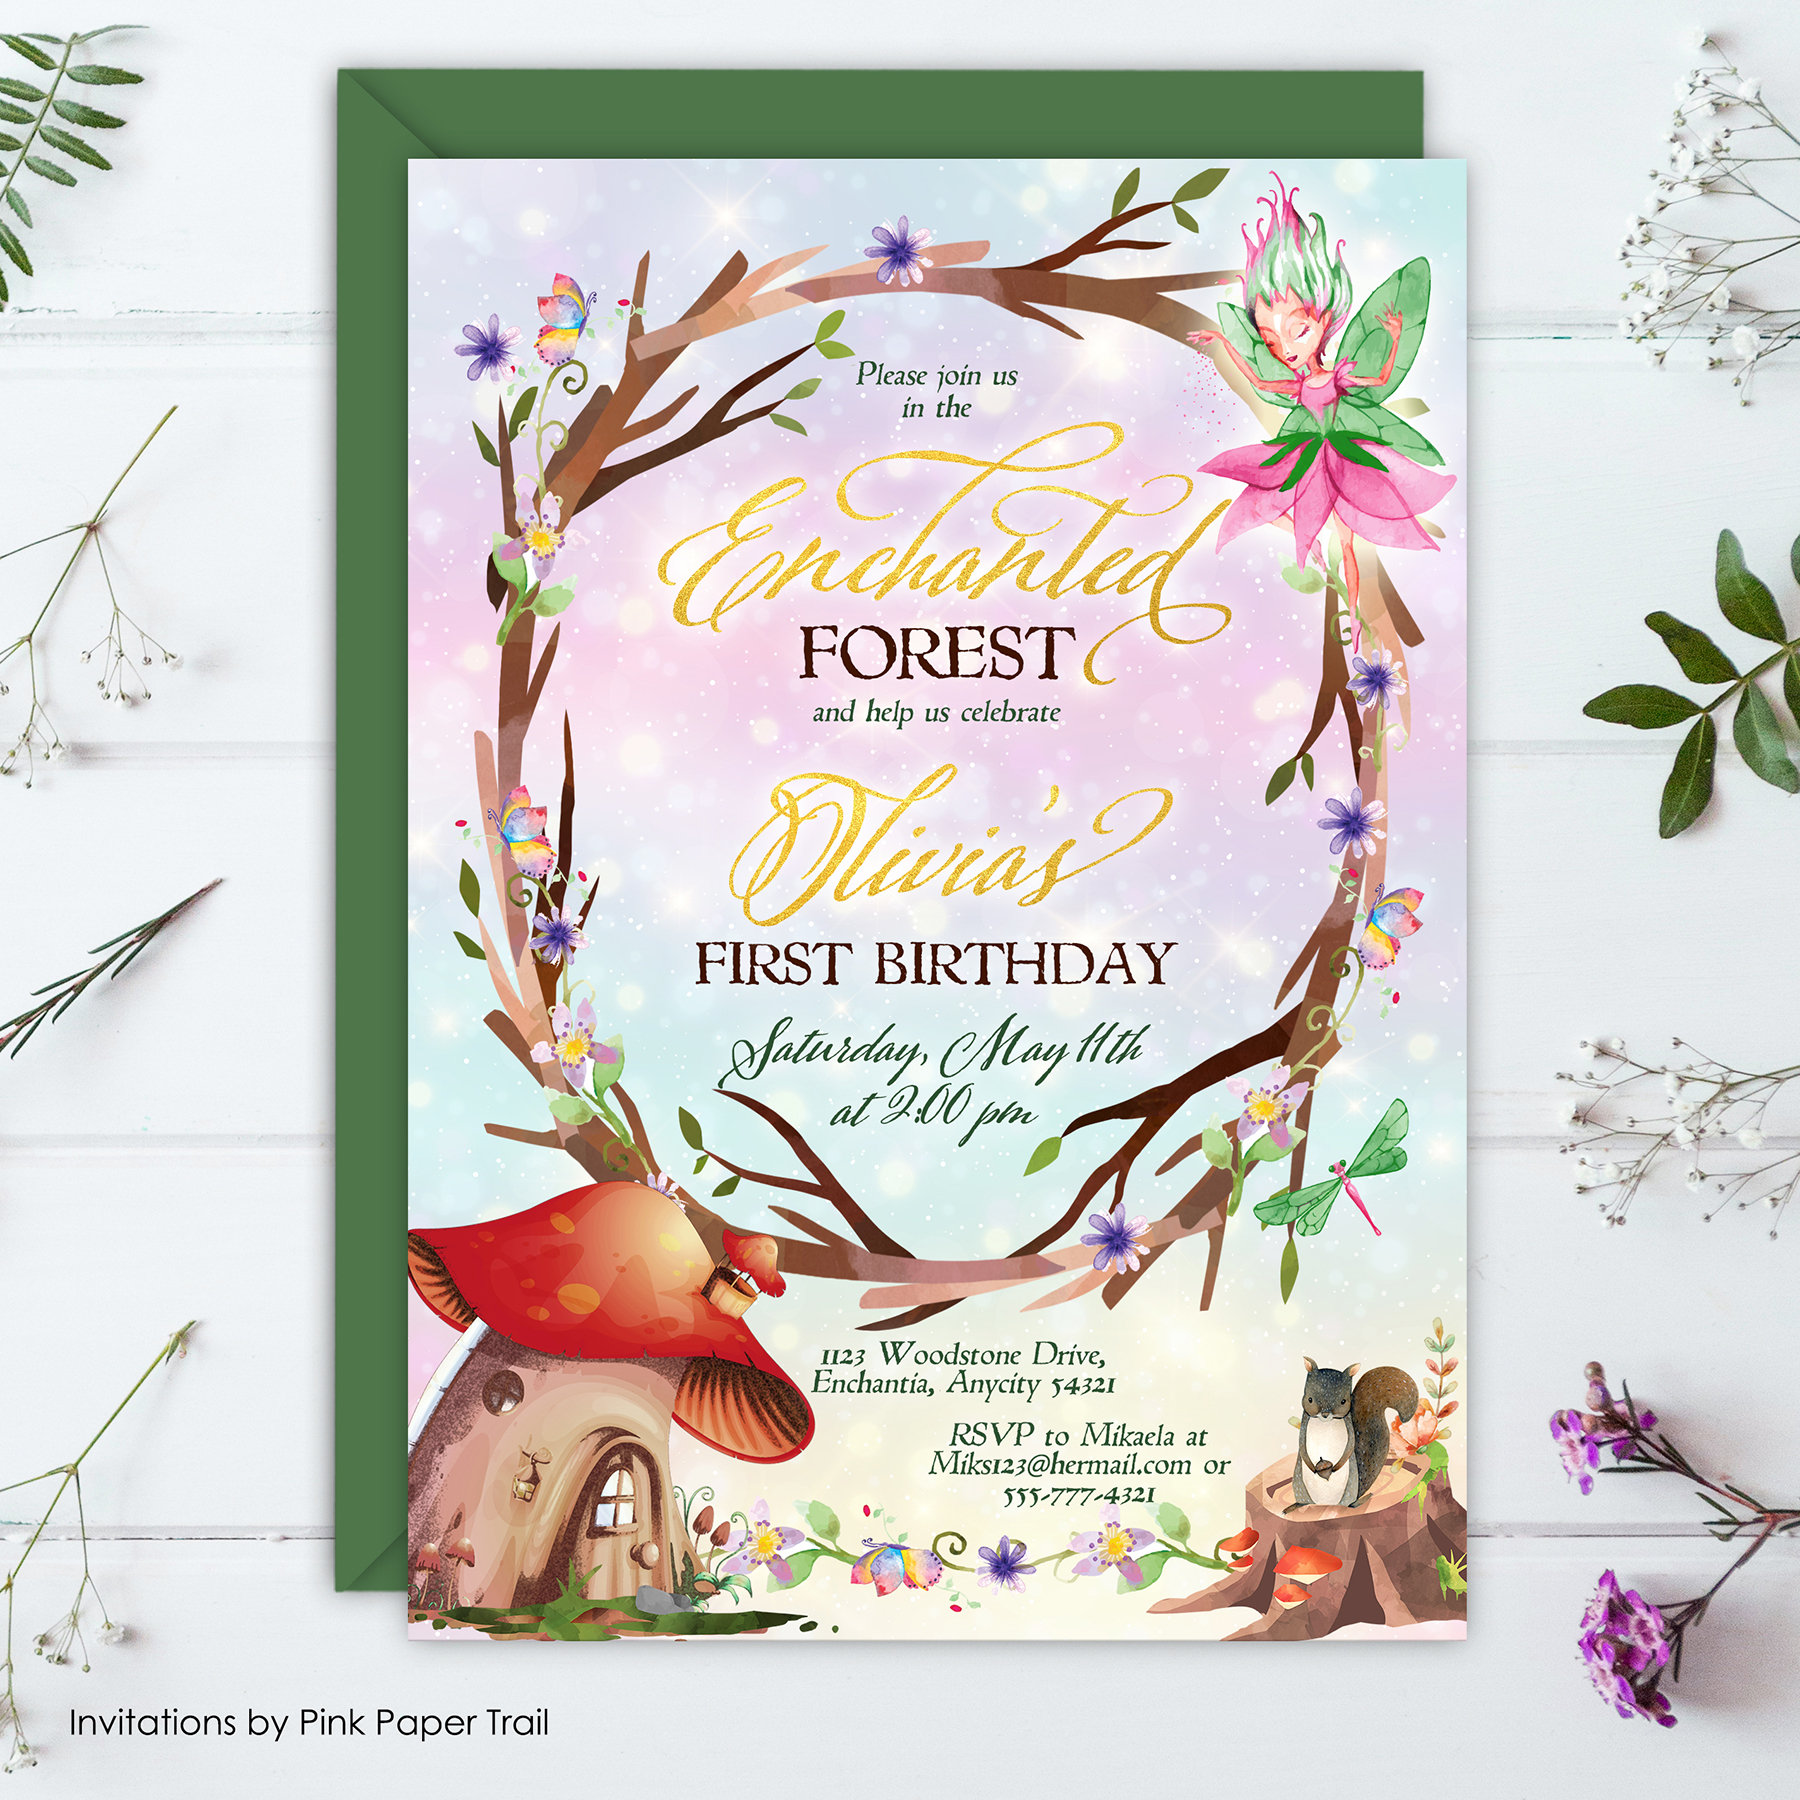 Invite Enchanted Fairy Forest Garden Tea Party Invitations Supply Decoration Decor 